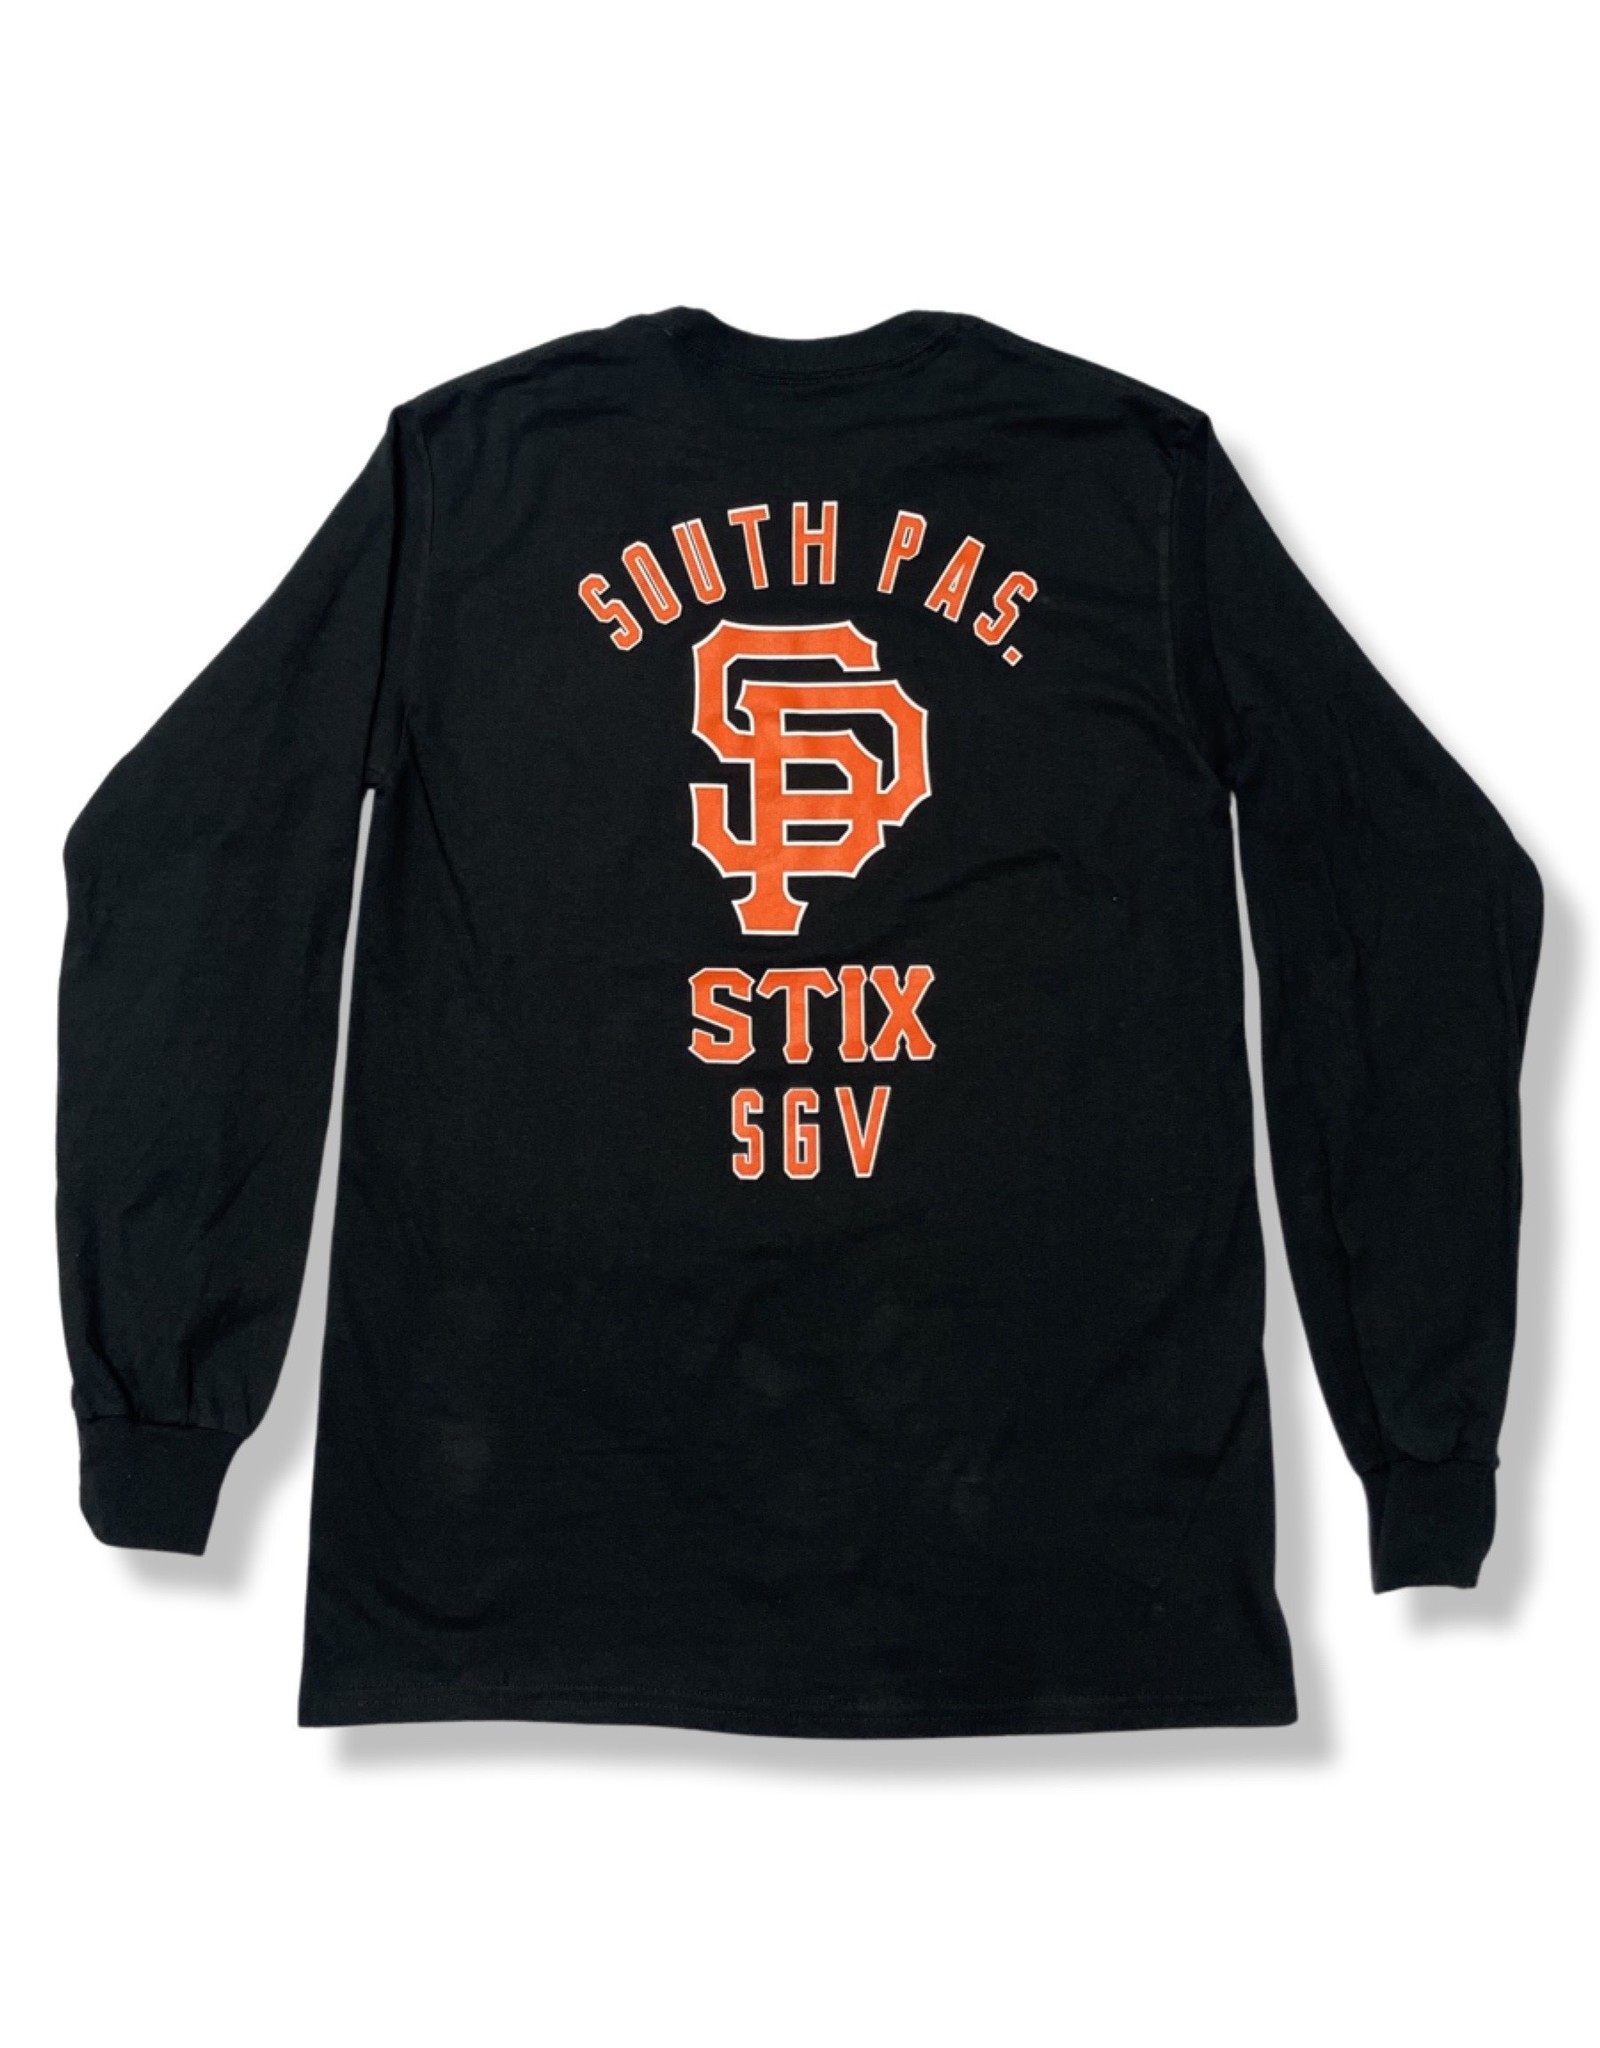 Stix SGV Stix Tee SGV South Pas L/S (Black/Orange)